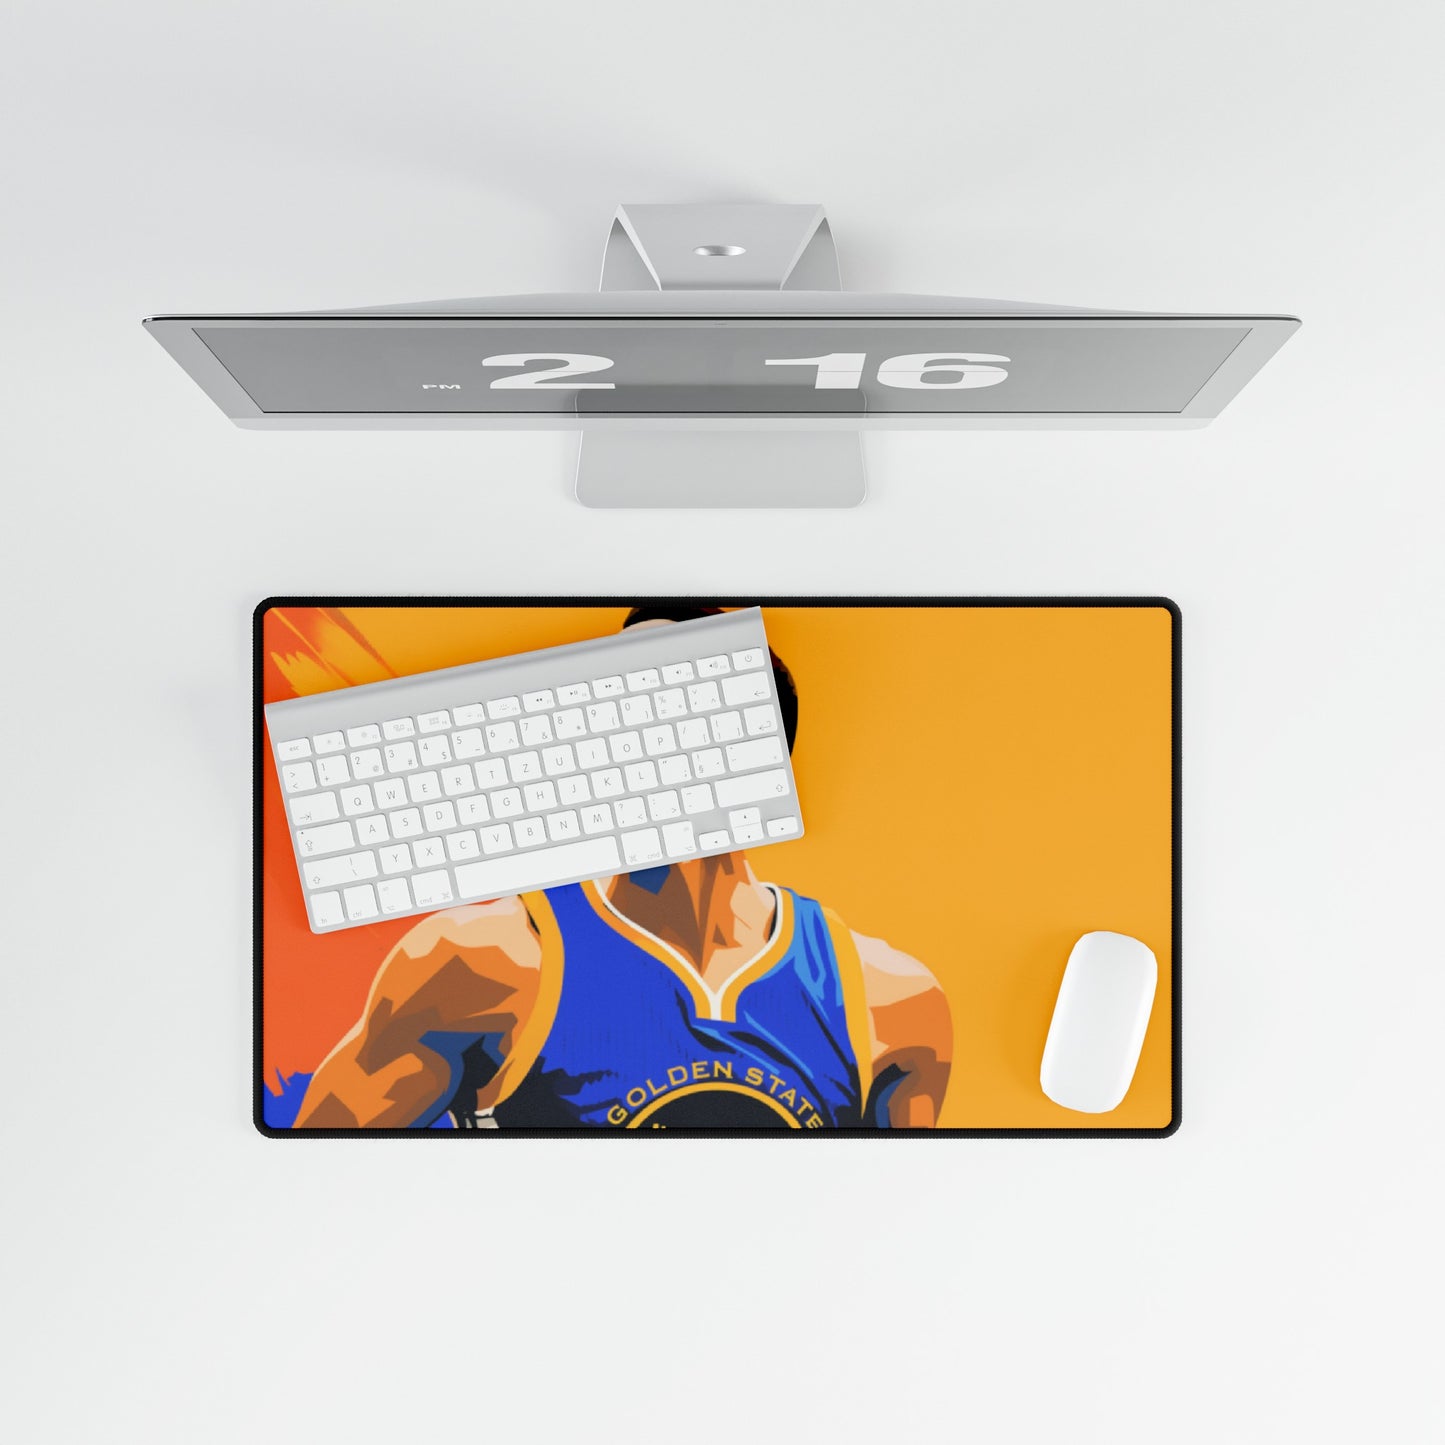 Steph Curry Golden State Warriors High Definition Desk Mat Curry Mousepad